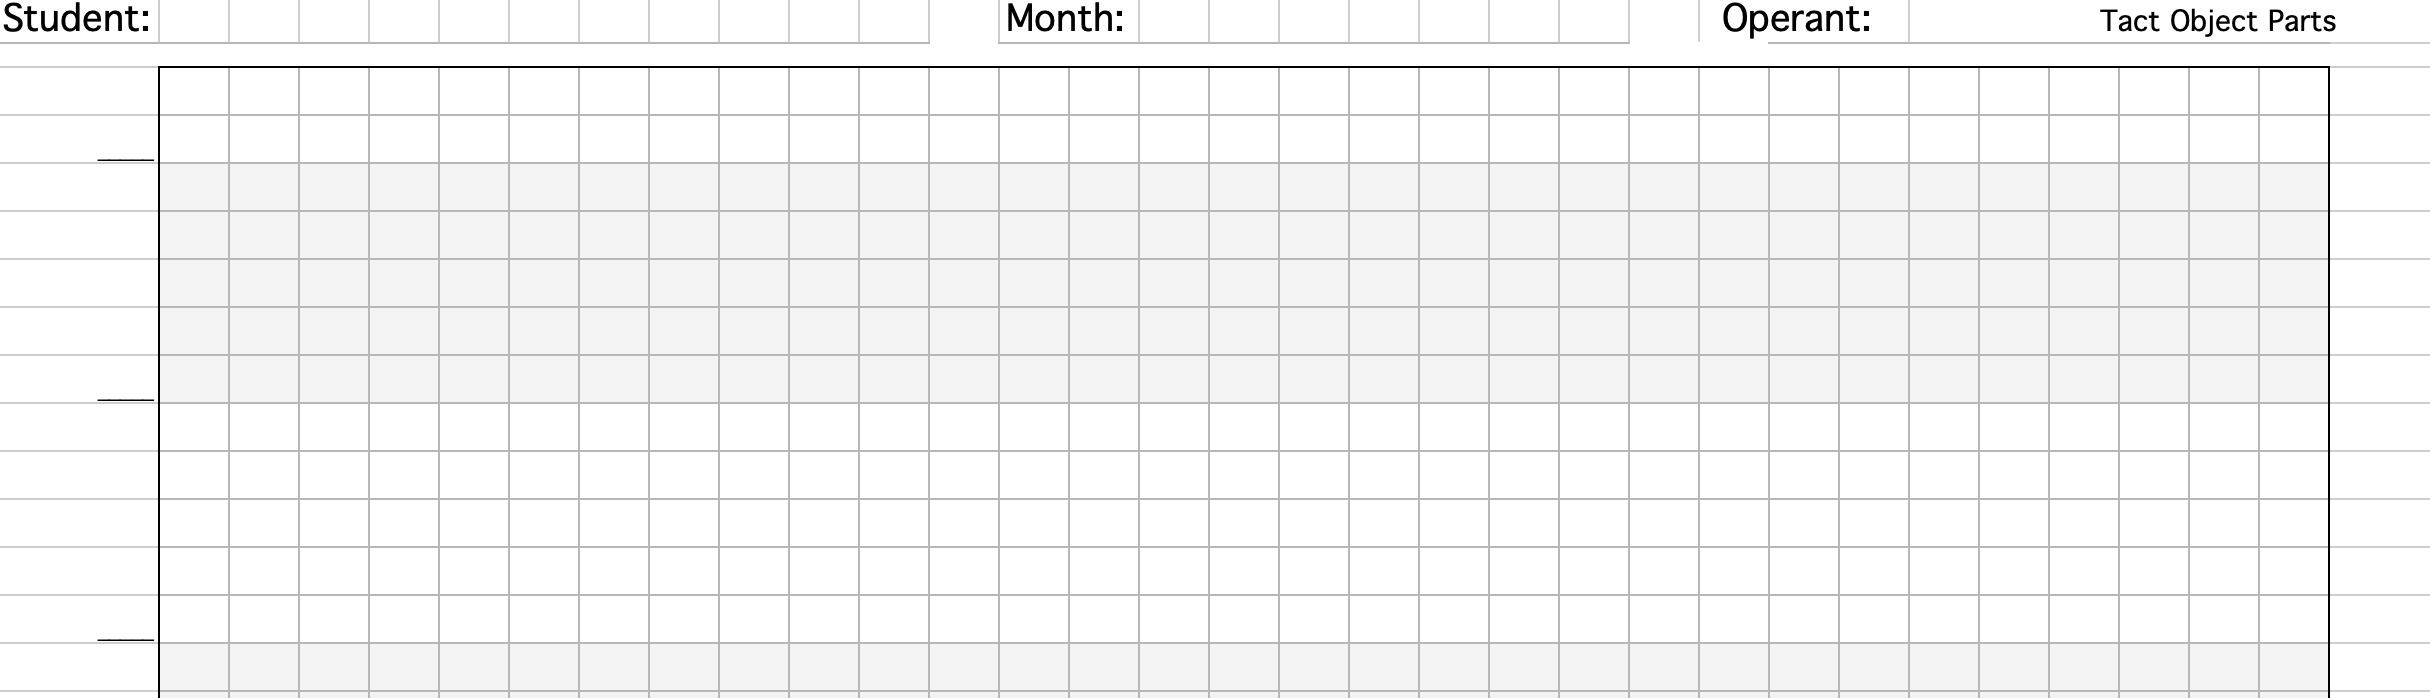 Blank Cumulative Monthly Graph w/Operants